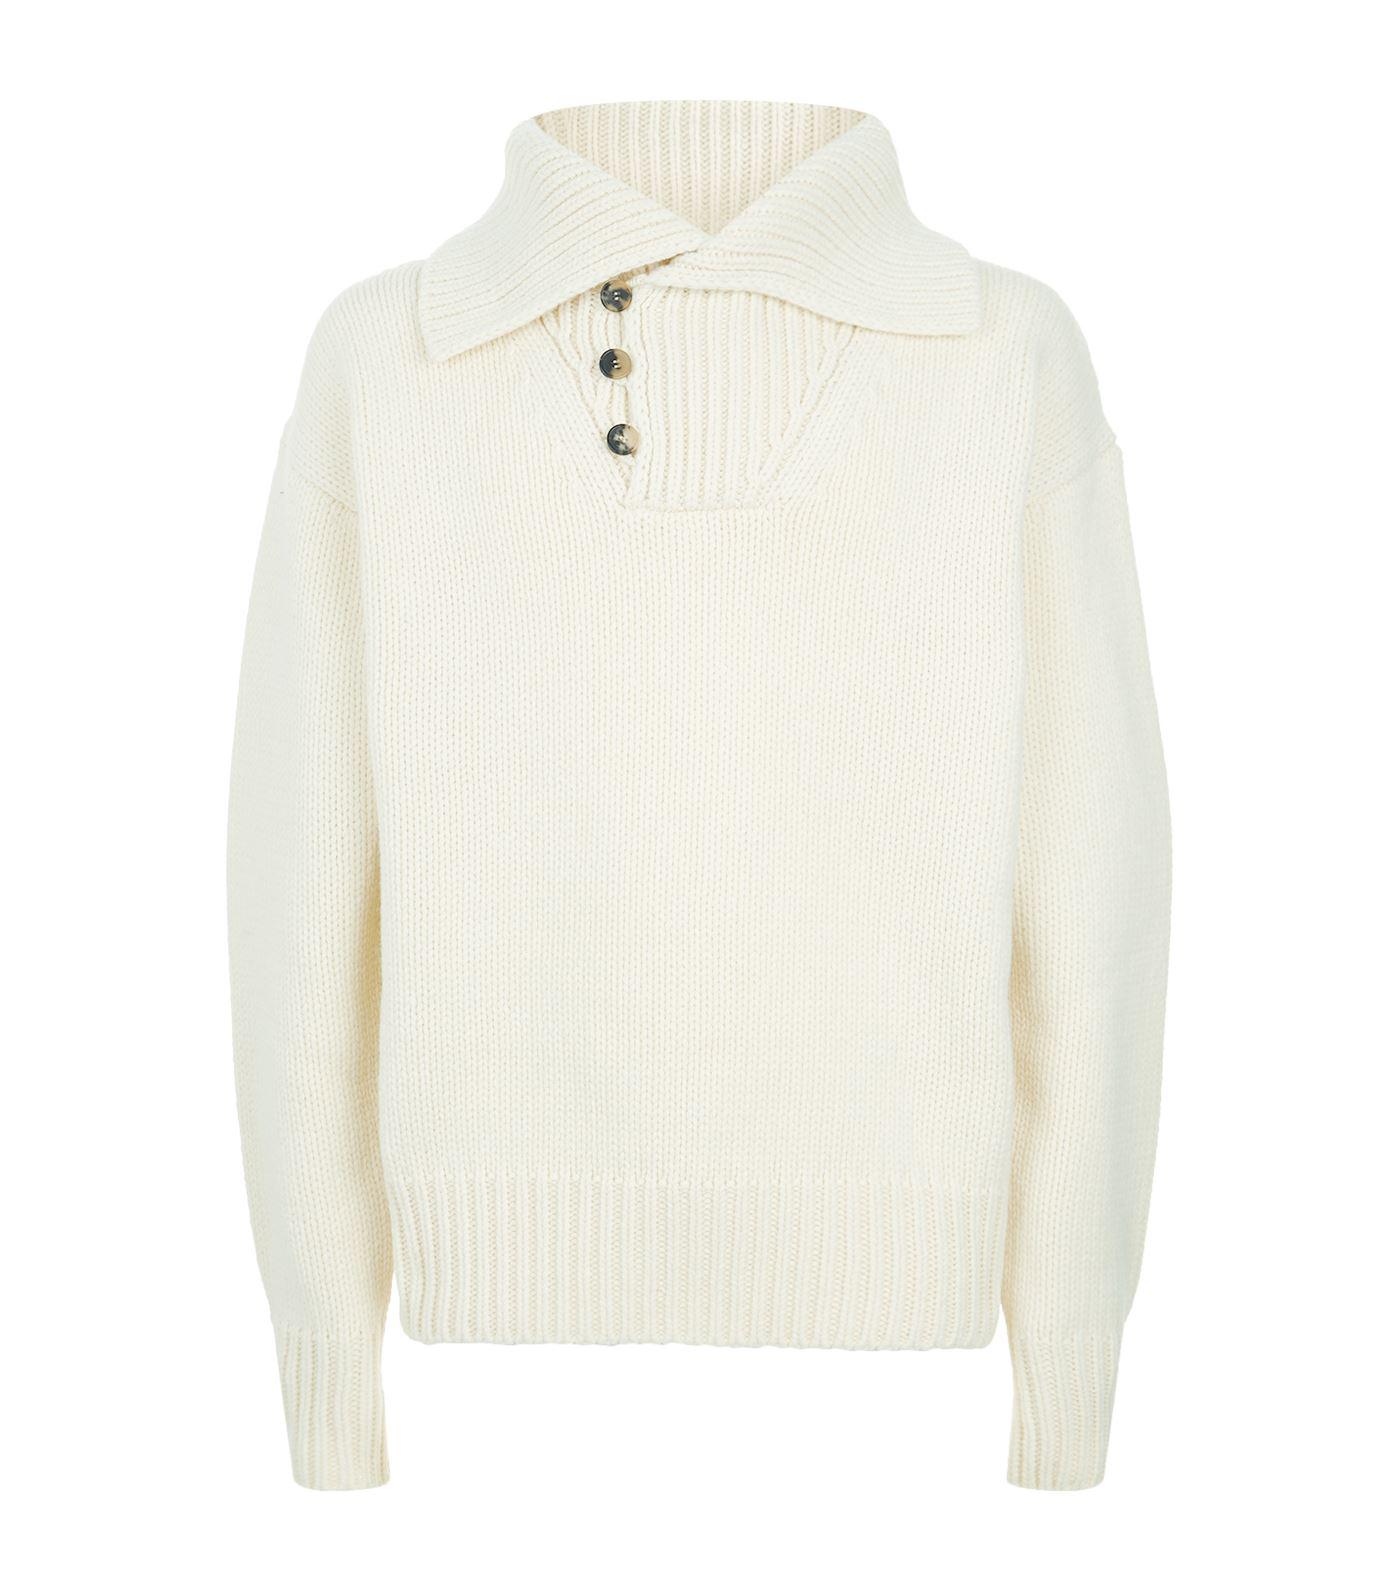 Lyst - Loewe Shawl Collar Sweater in White for Men